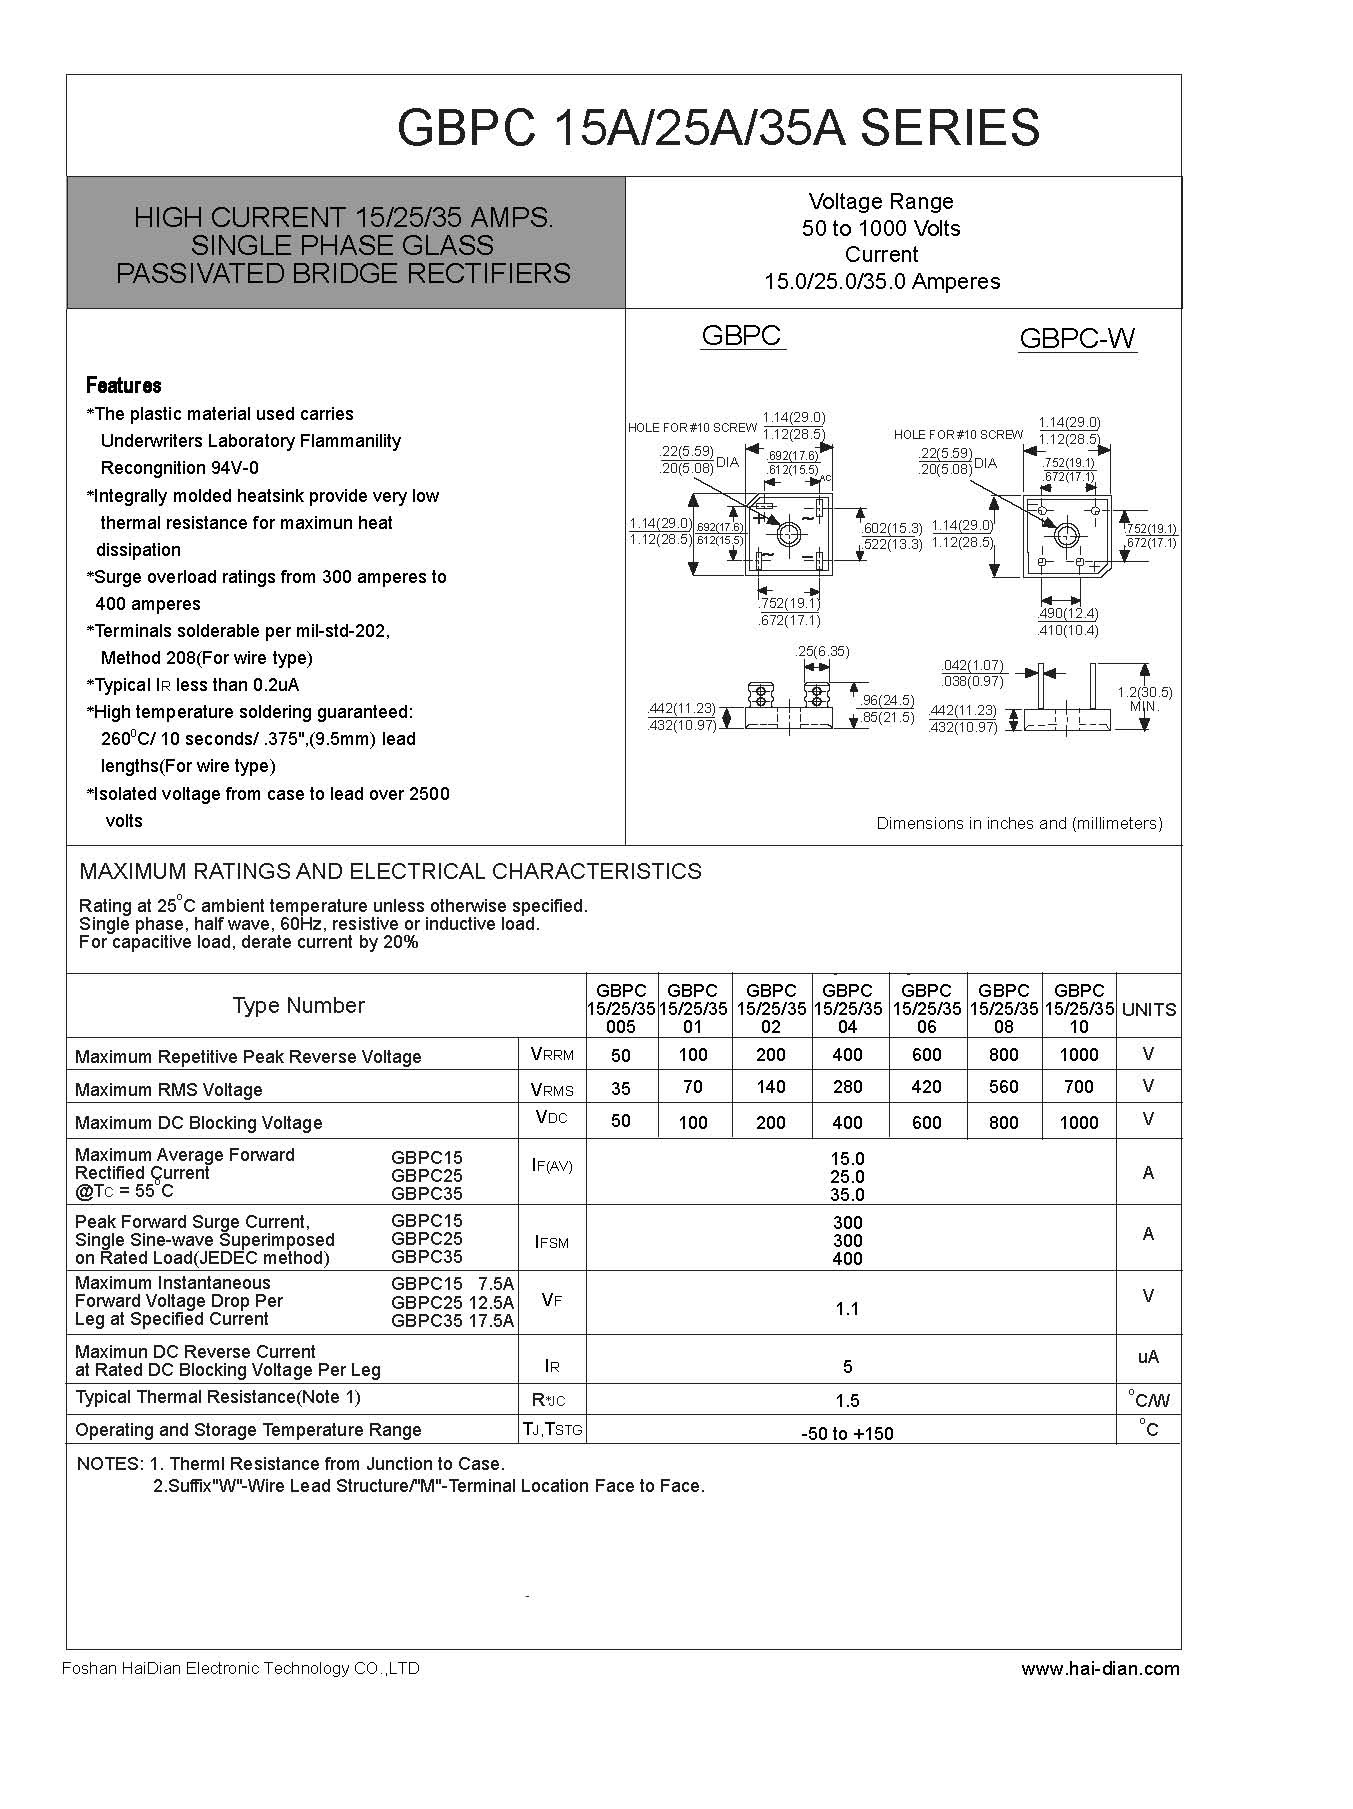 GBPC2506桥式整流器(整流桥堆)-- 佛山海电电子科技有限公司